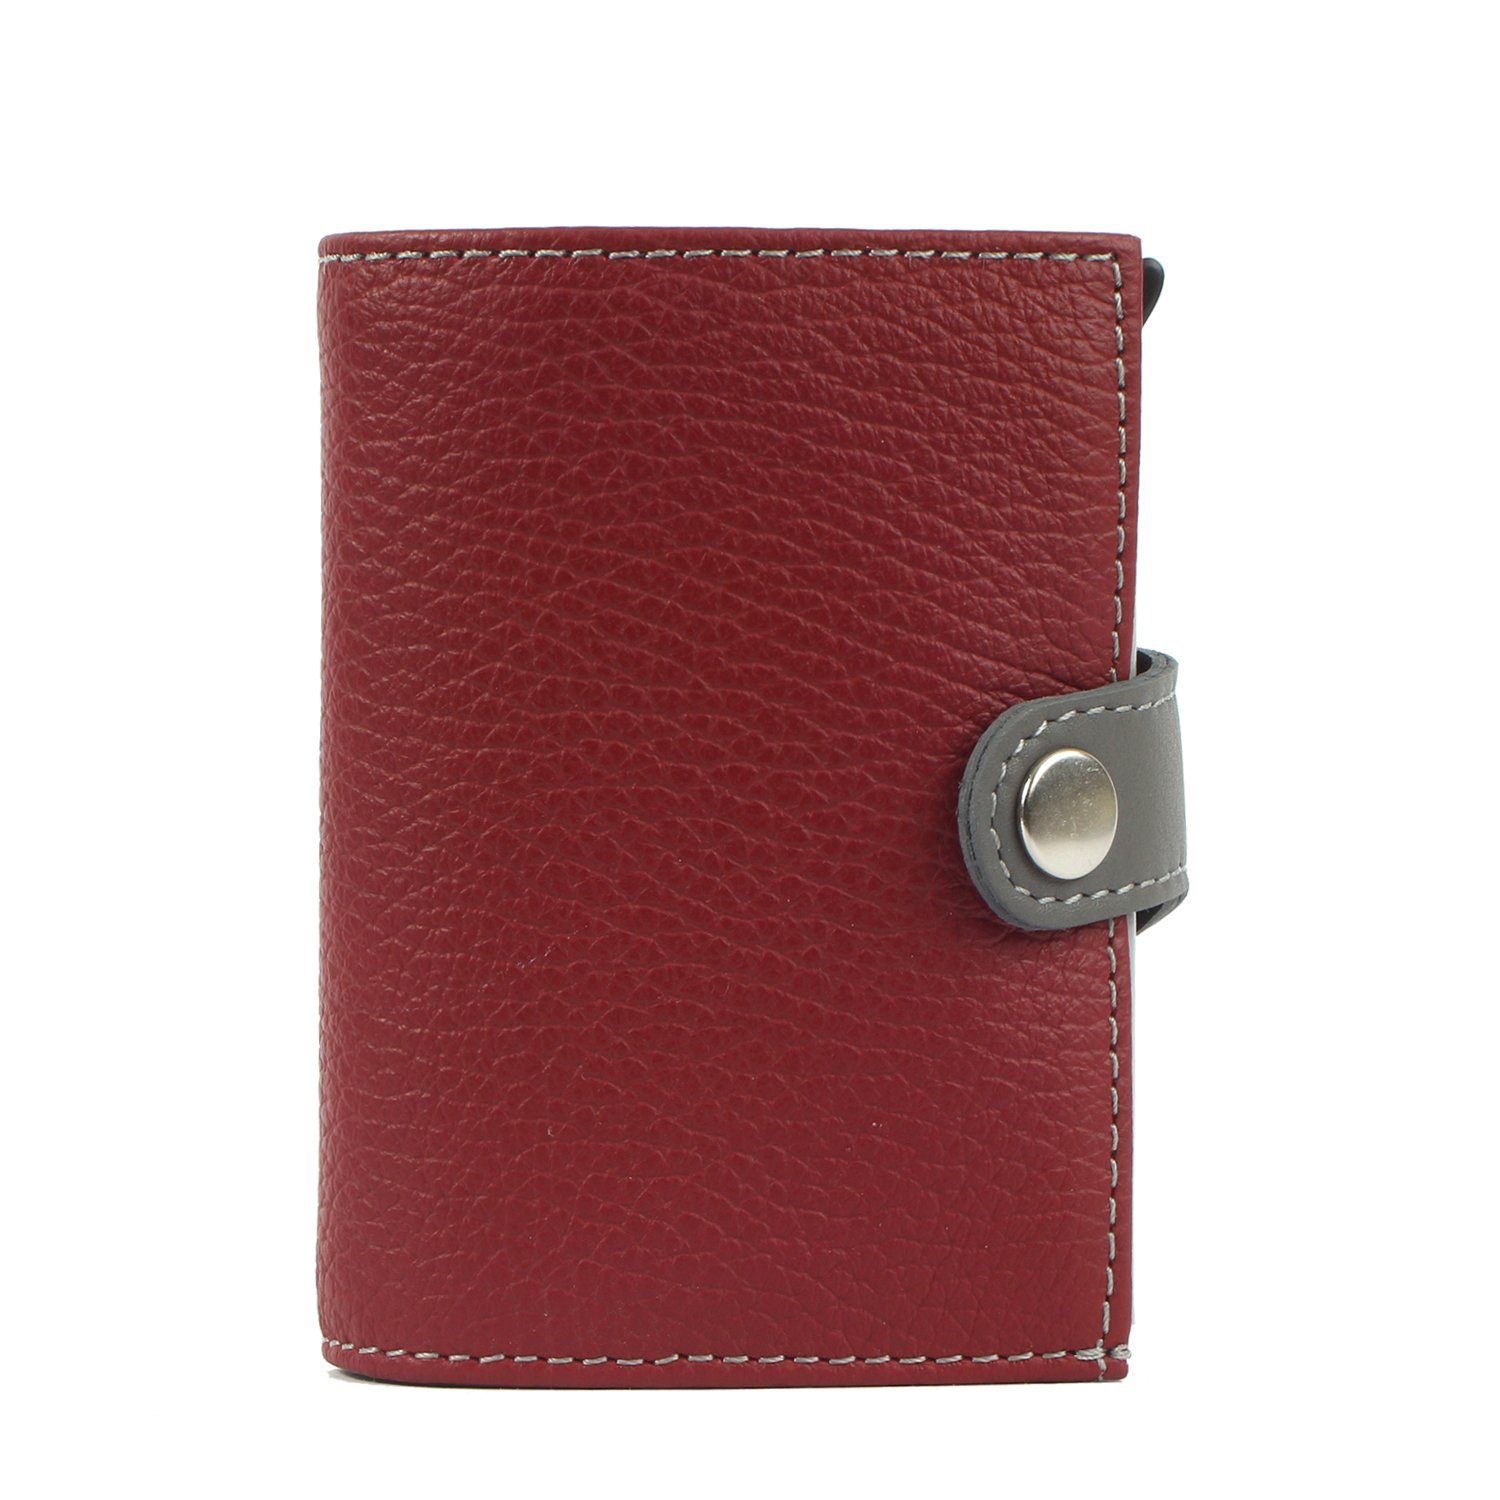 Margelisch Mini karminrot noonyu Kreditkartenbörse Upcycling RFID double Leder leather, aus Geldbörse